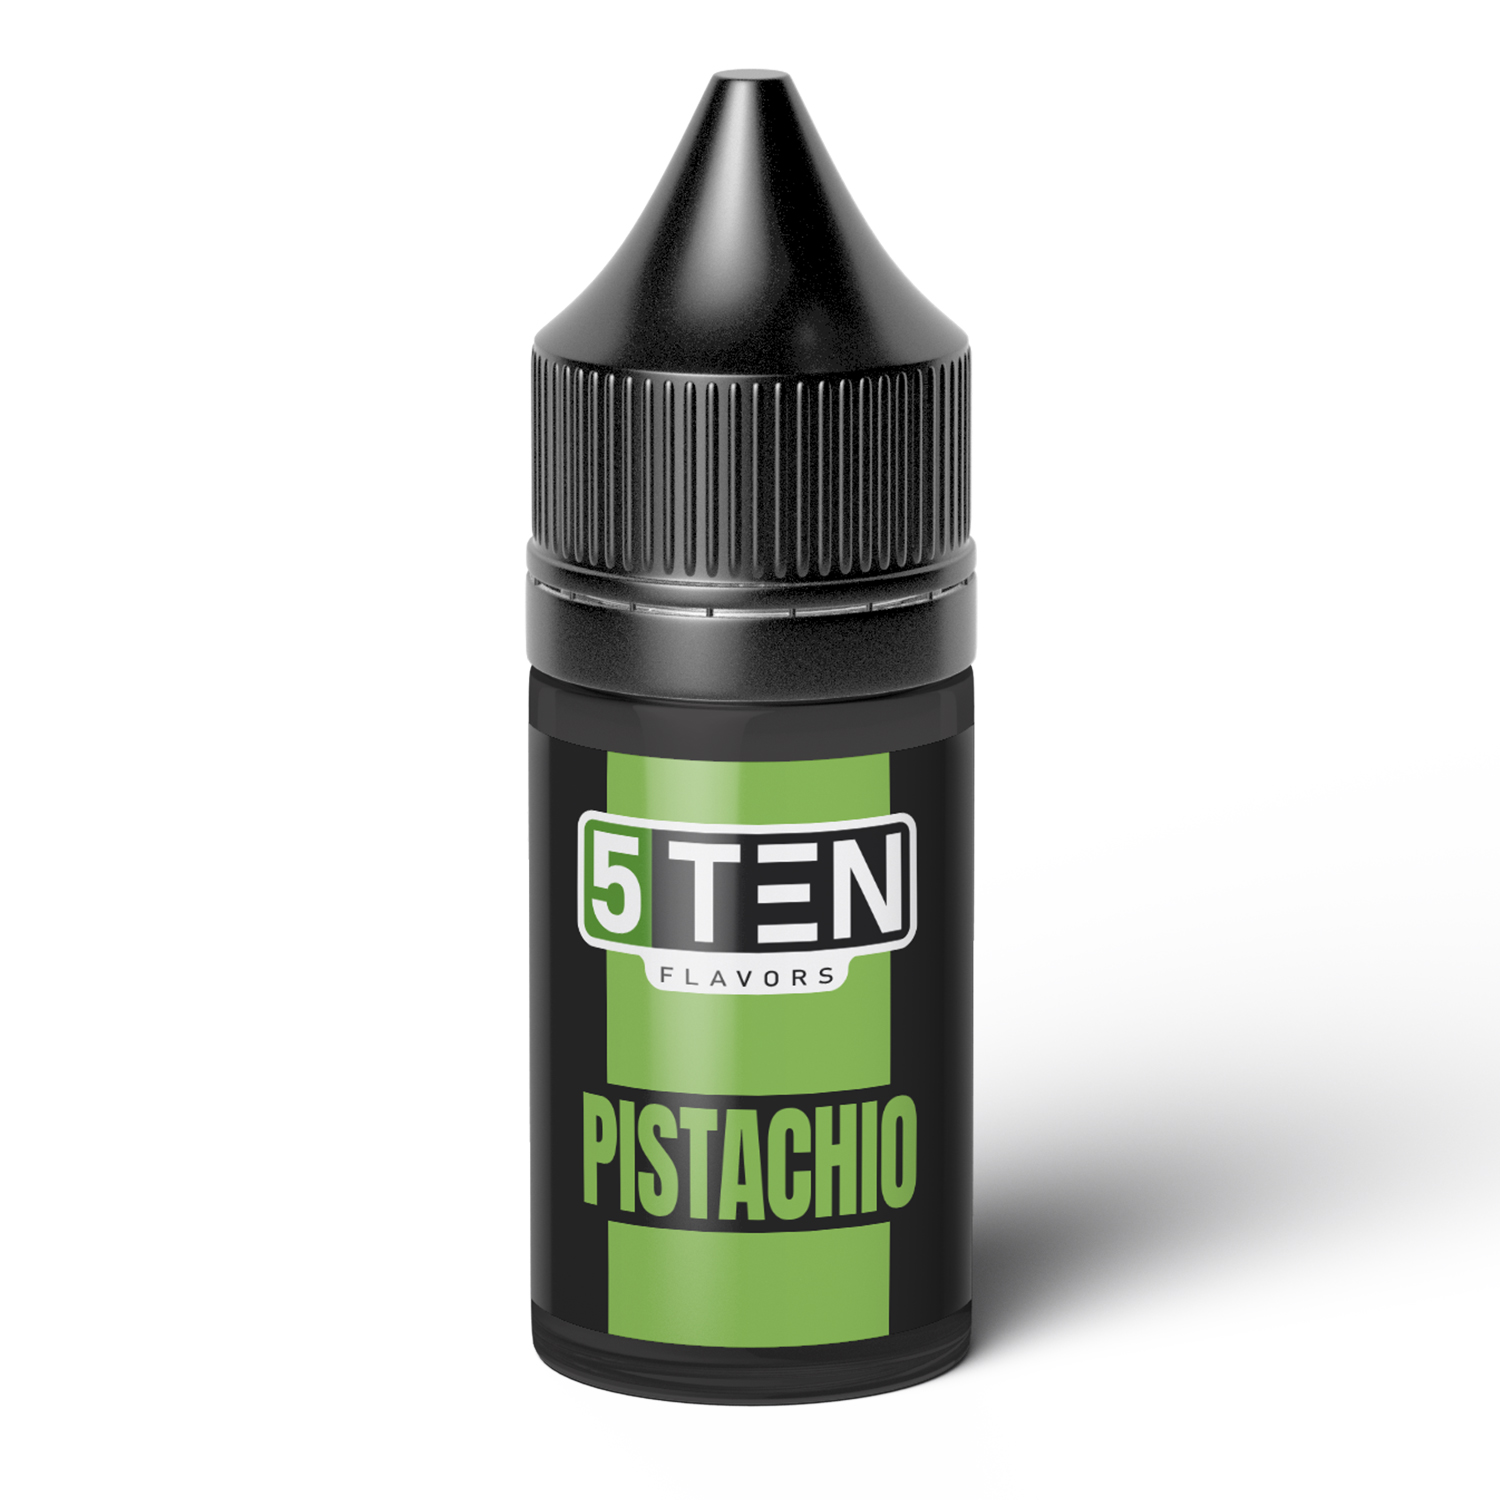 Pistachio - 5TEN Flavors - Longfill 2ml